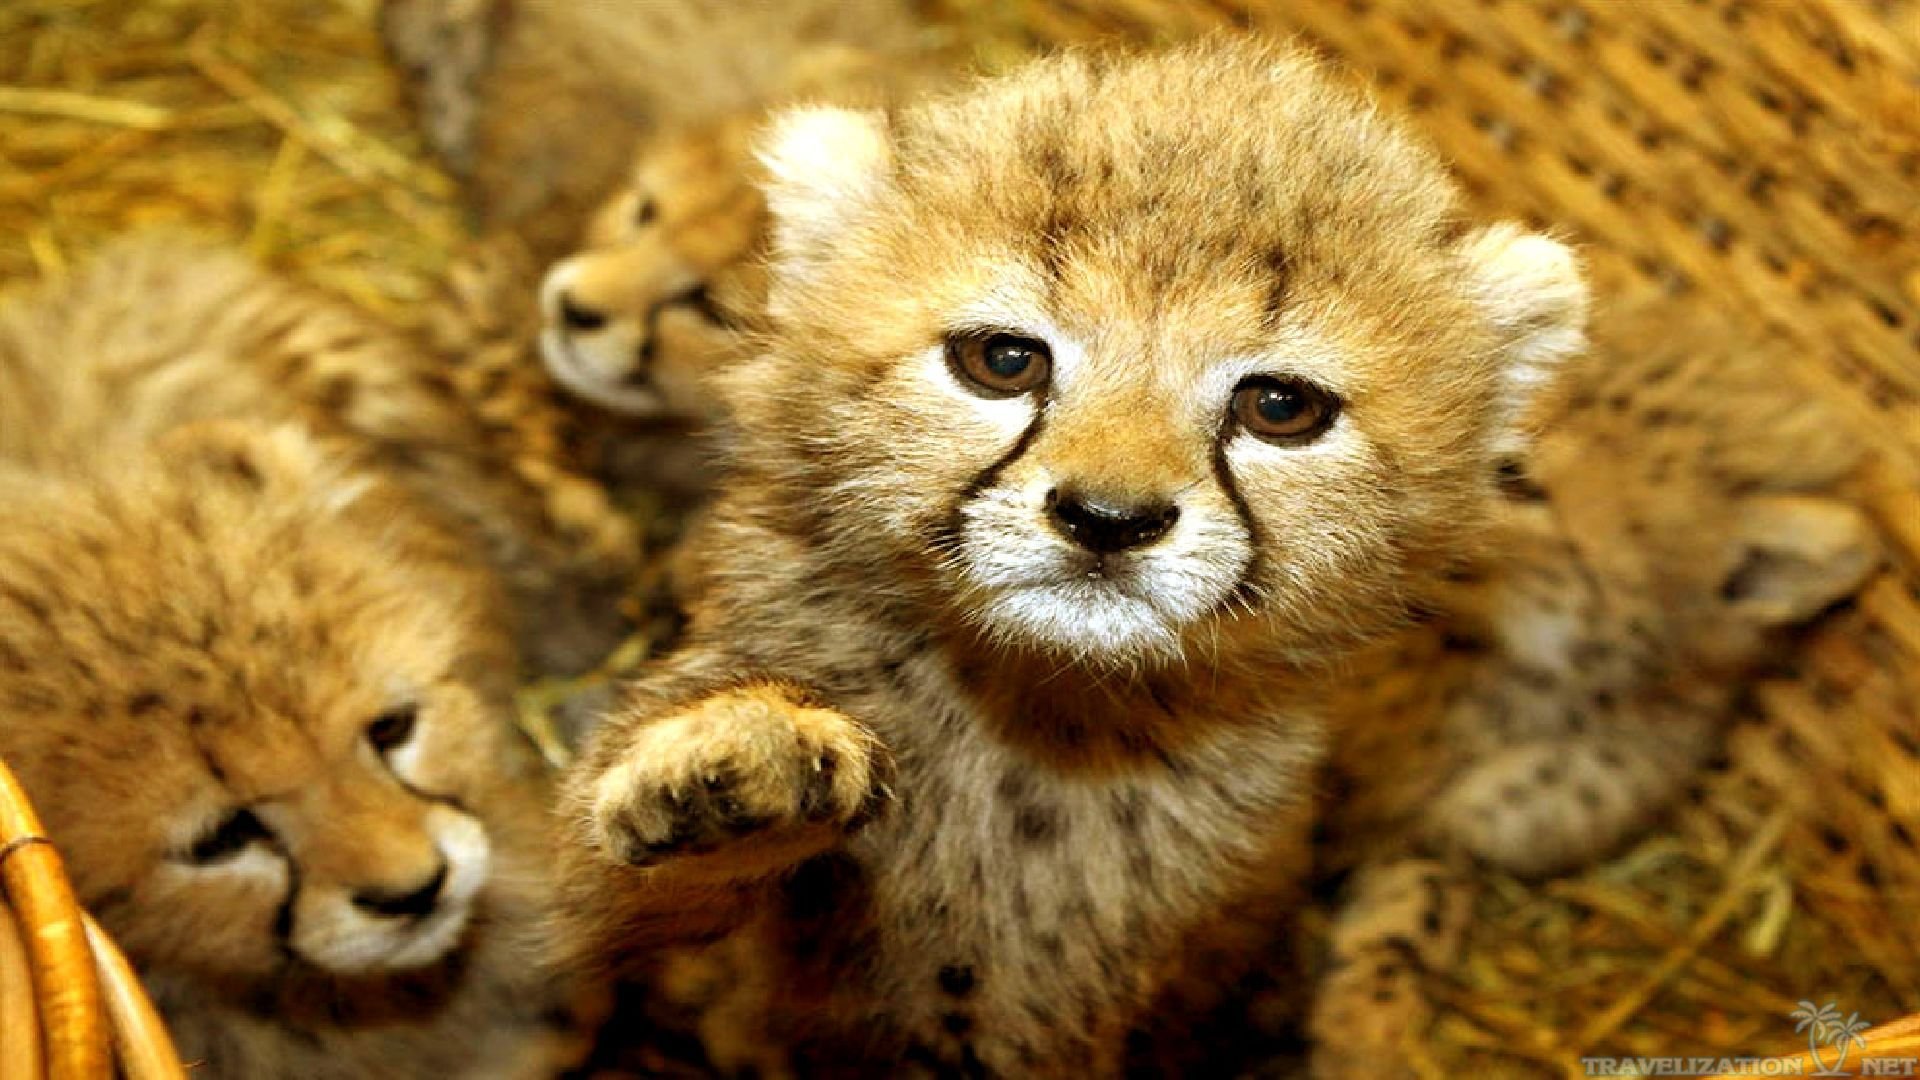 Cute Baby Animal Wallpapers Download Free | PixelsTalk.Net